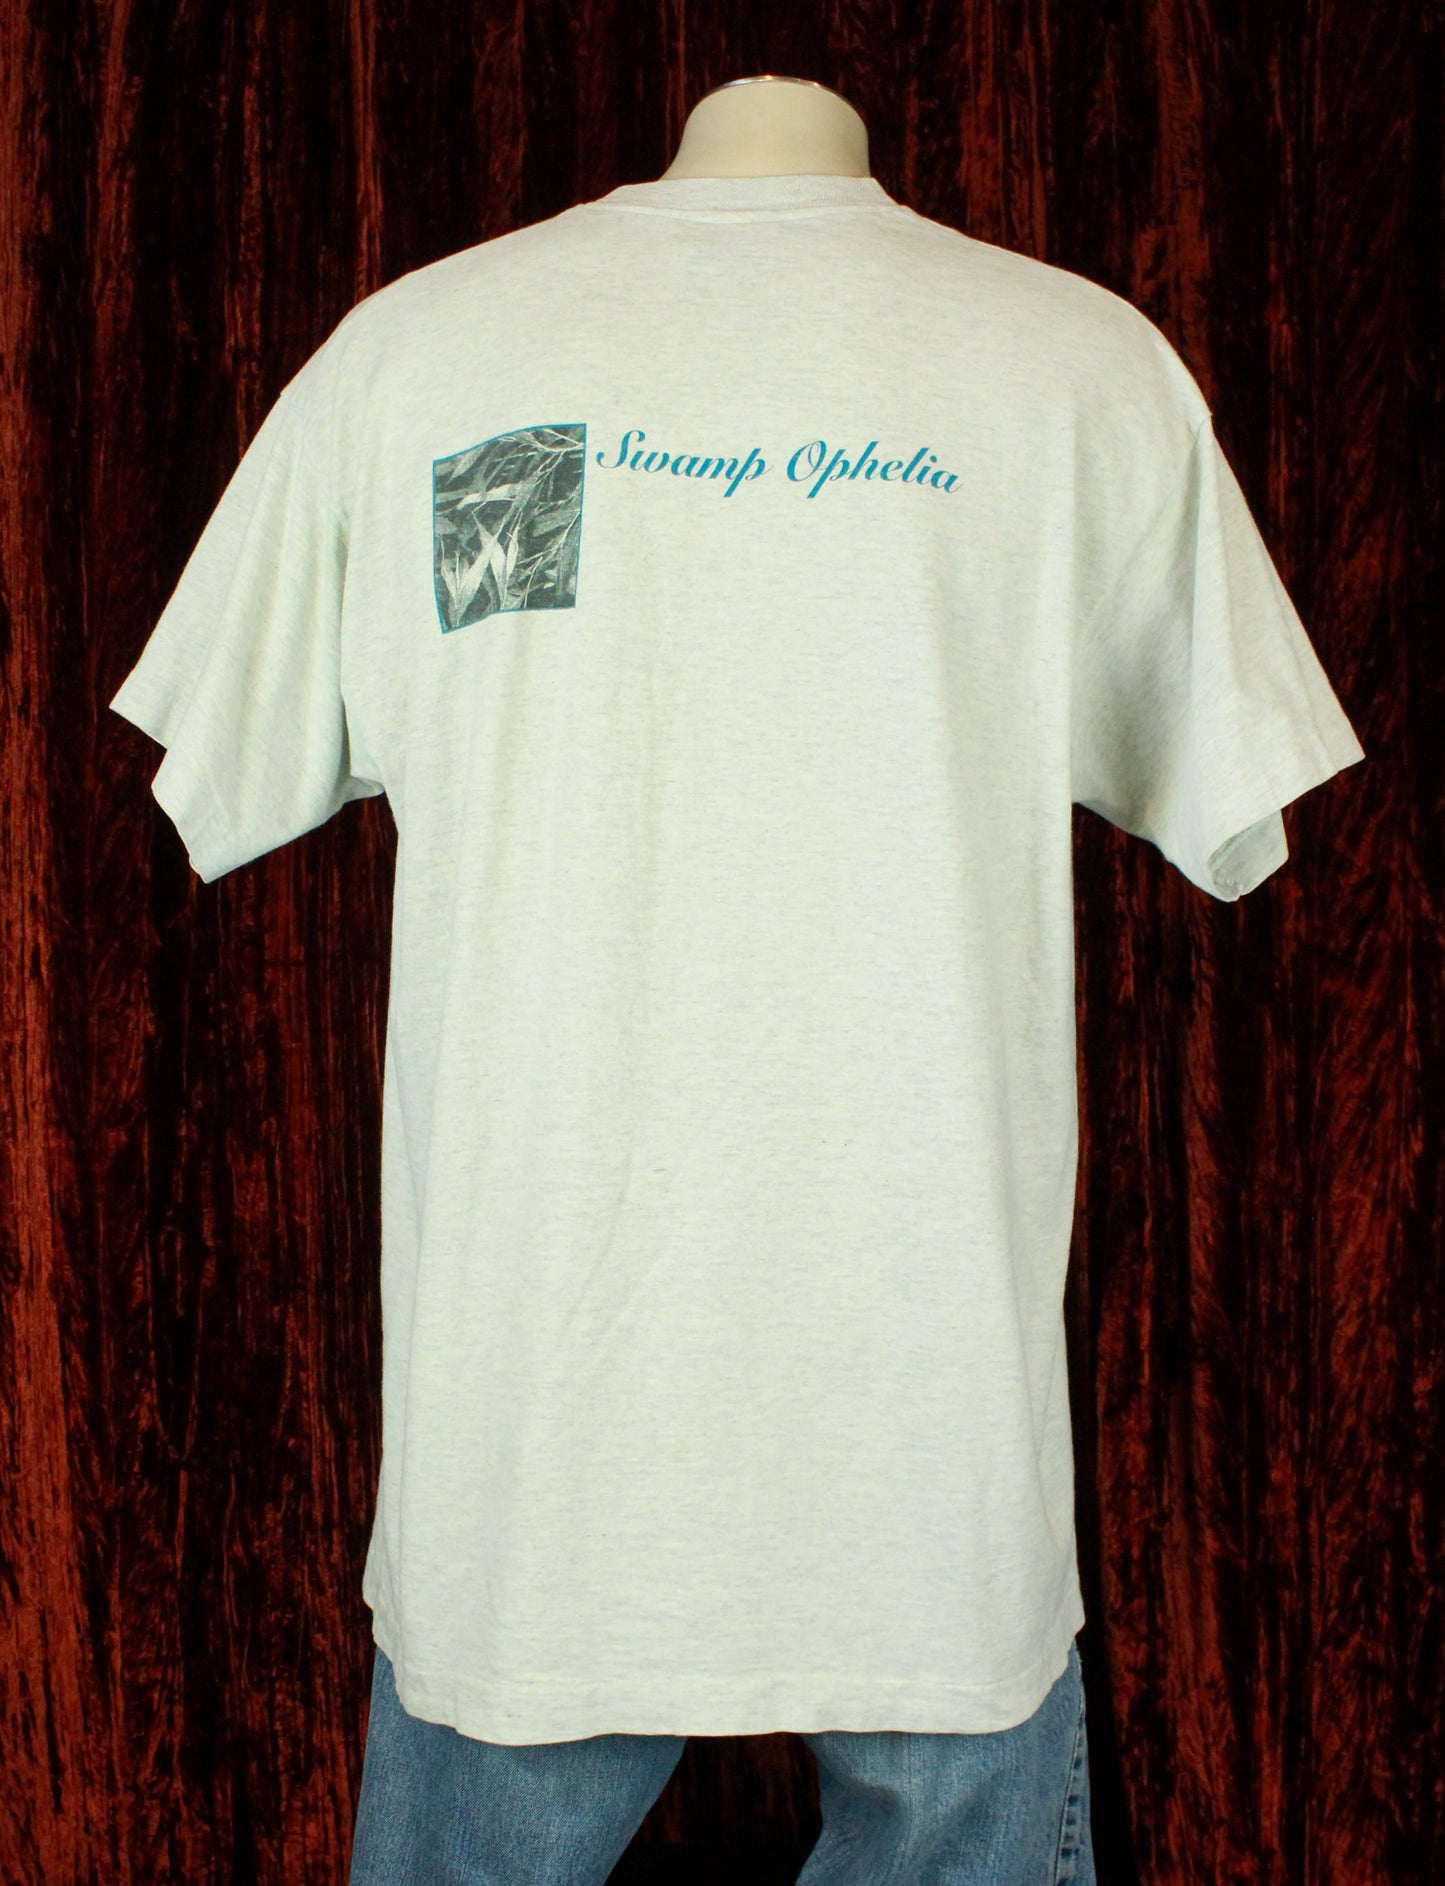 Vintage Indigo Girls Concert T Shirt 1994 Swamp Ophelia Tour - XL